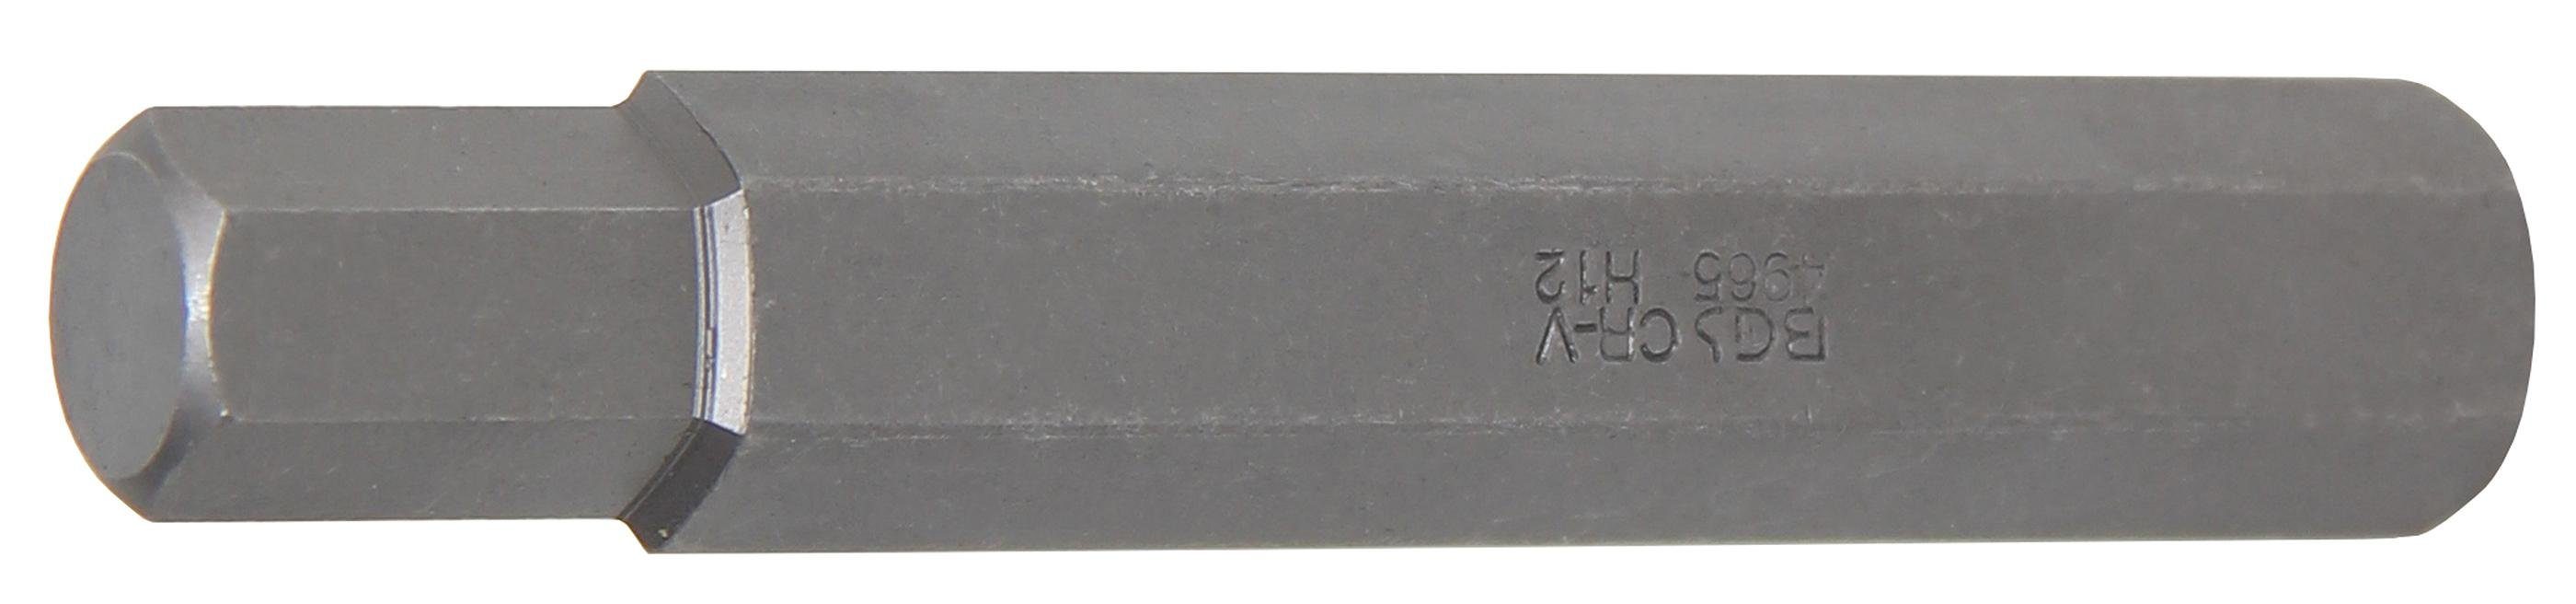 BGS technic Sechskant-Bit Bit, Länge 75 mm, Antrieb Außensechskant 10 mm (3/8), Innensechskant 12 mm